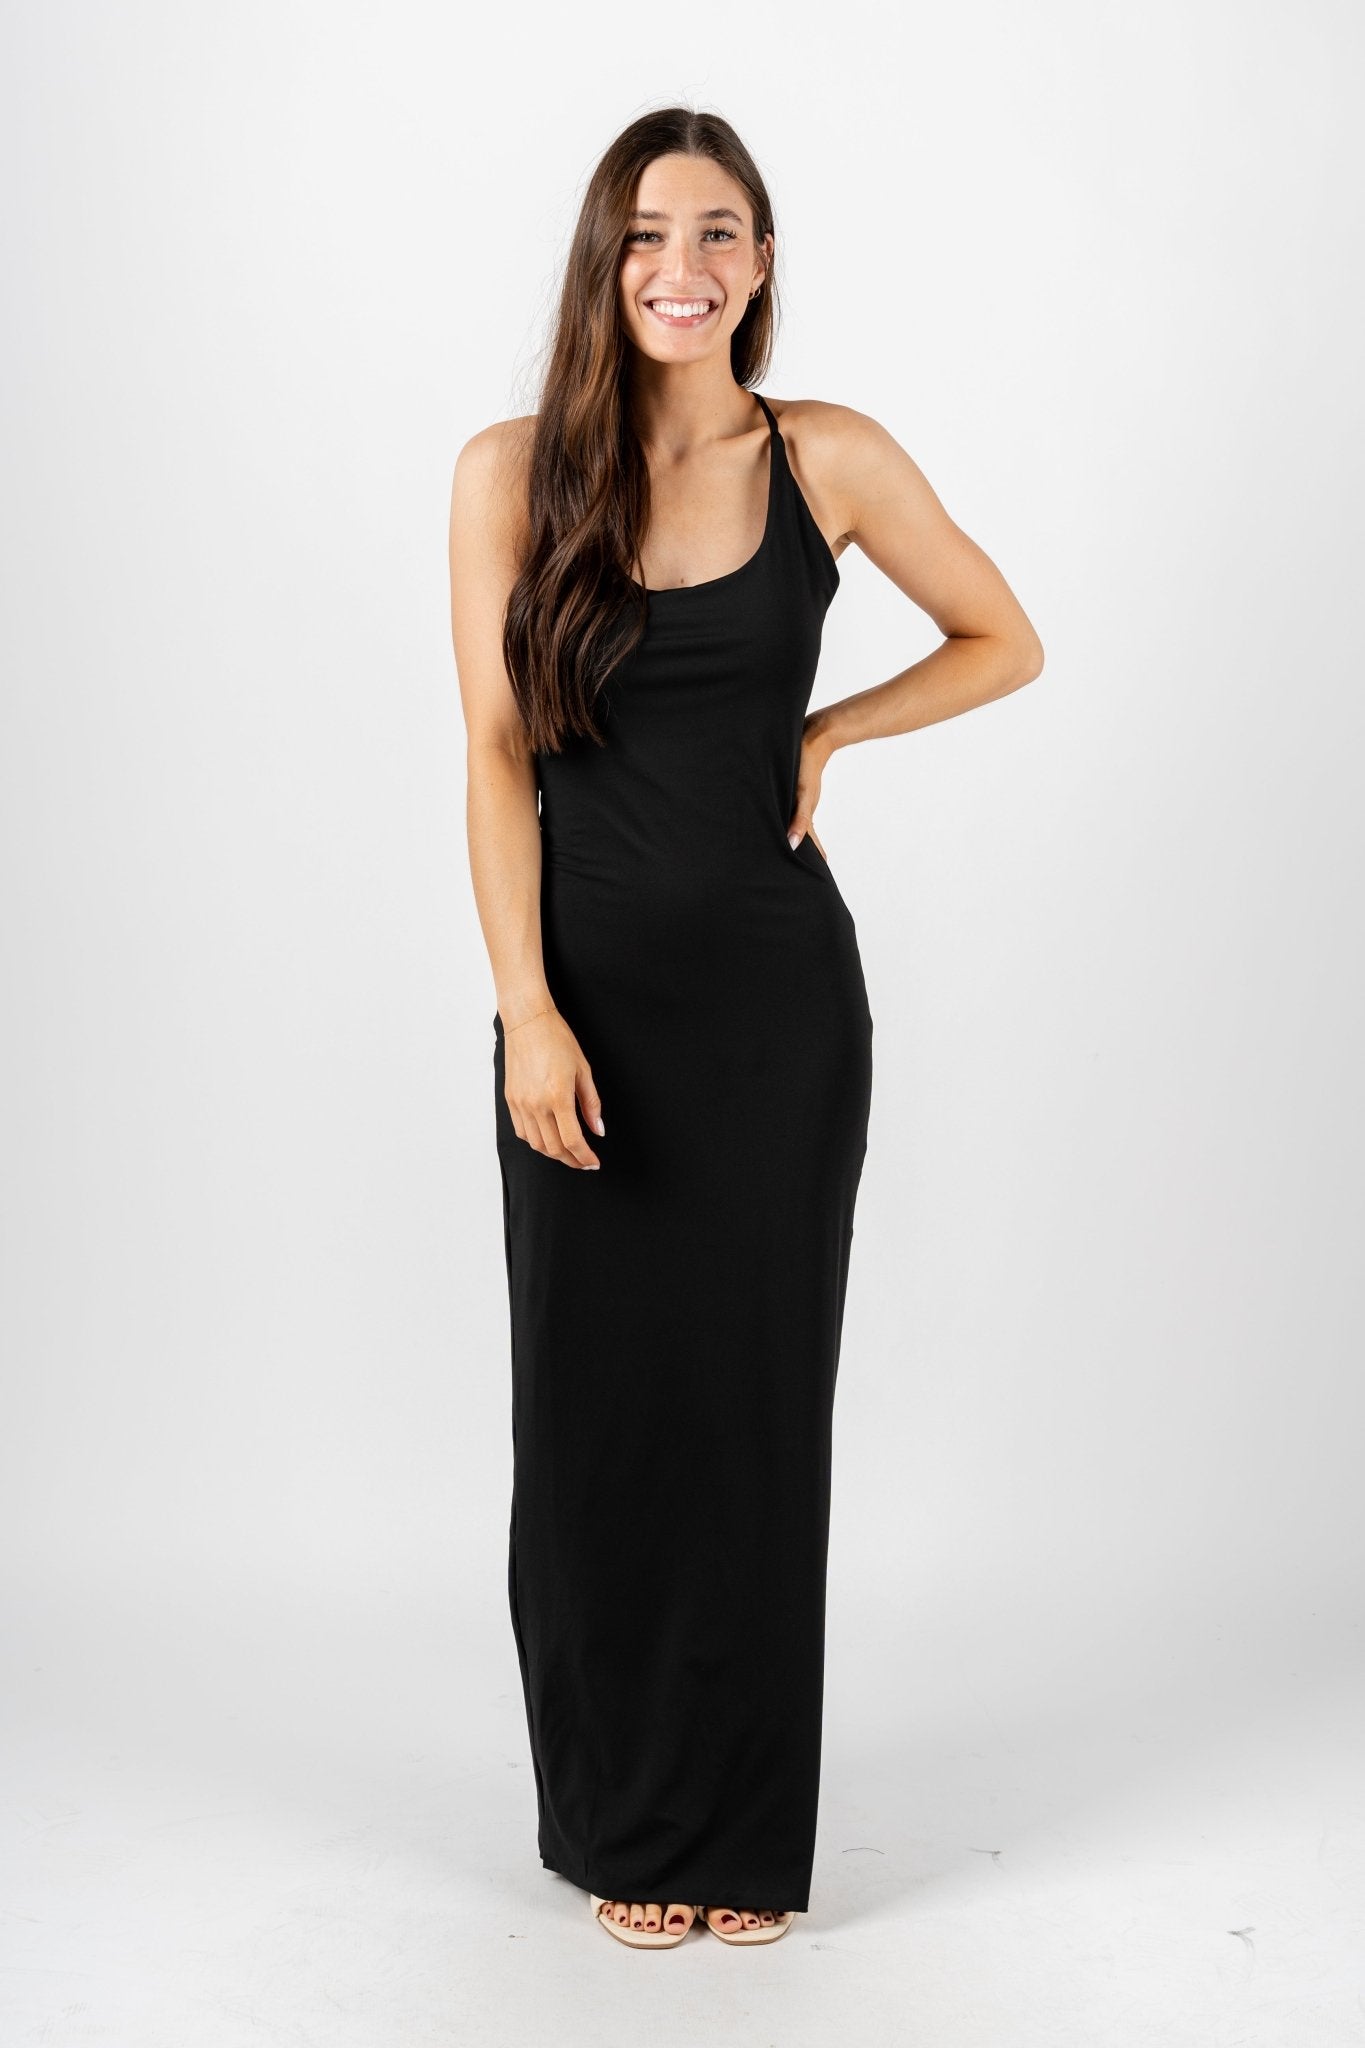 Knit maxi dress black - Trendy Dress - Fashion Dresses at Lush Fashion Lounge Boutique in Oklahoma City